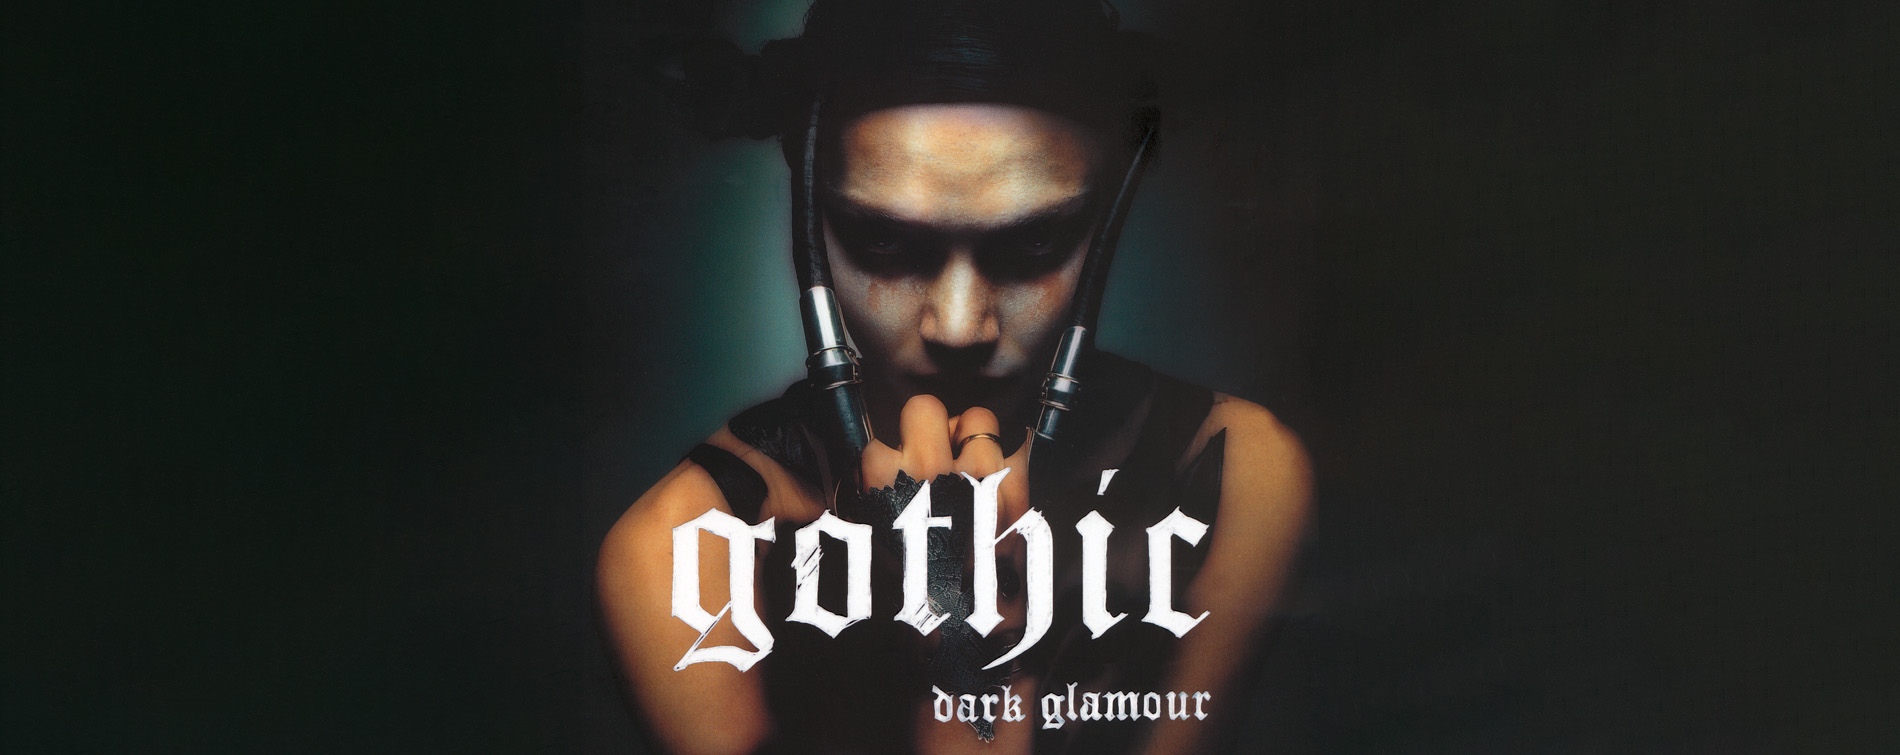 gothic dark glamour book cover